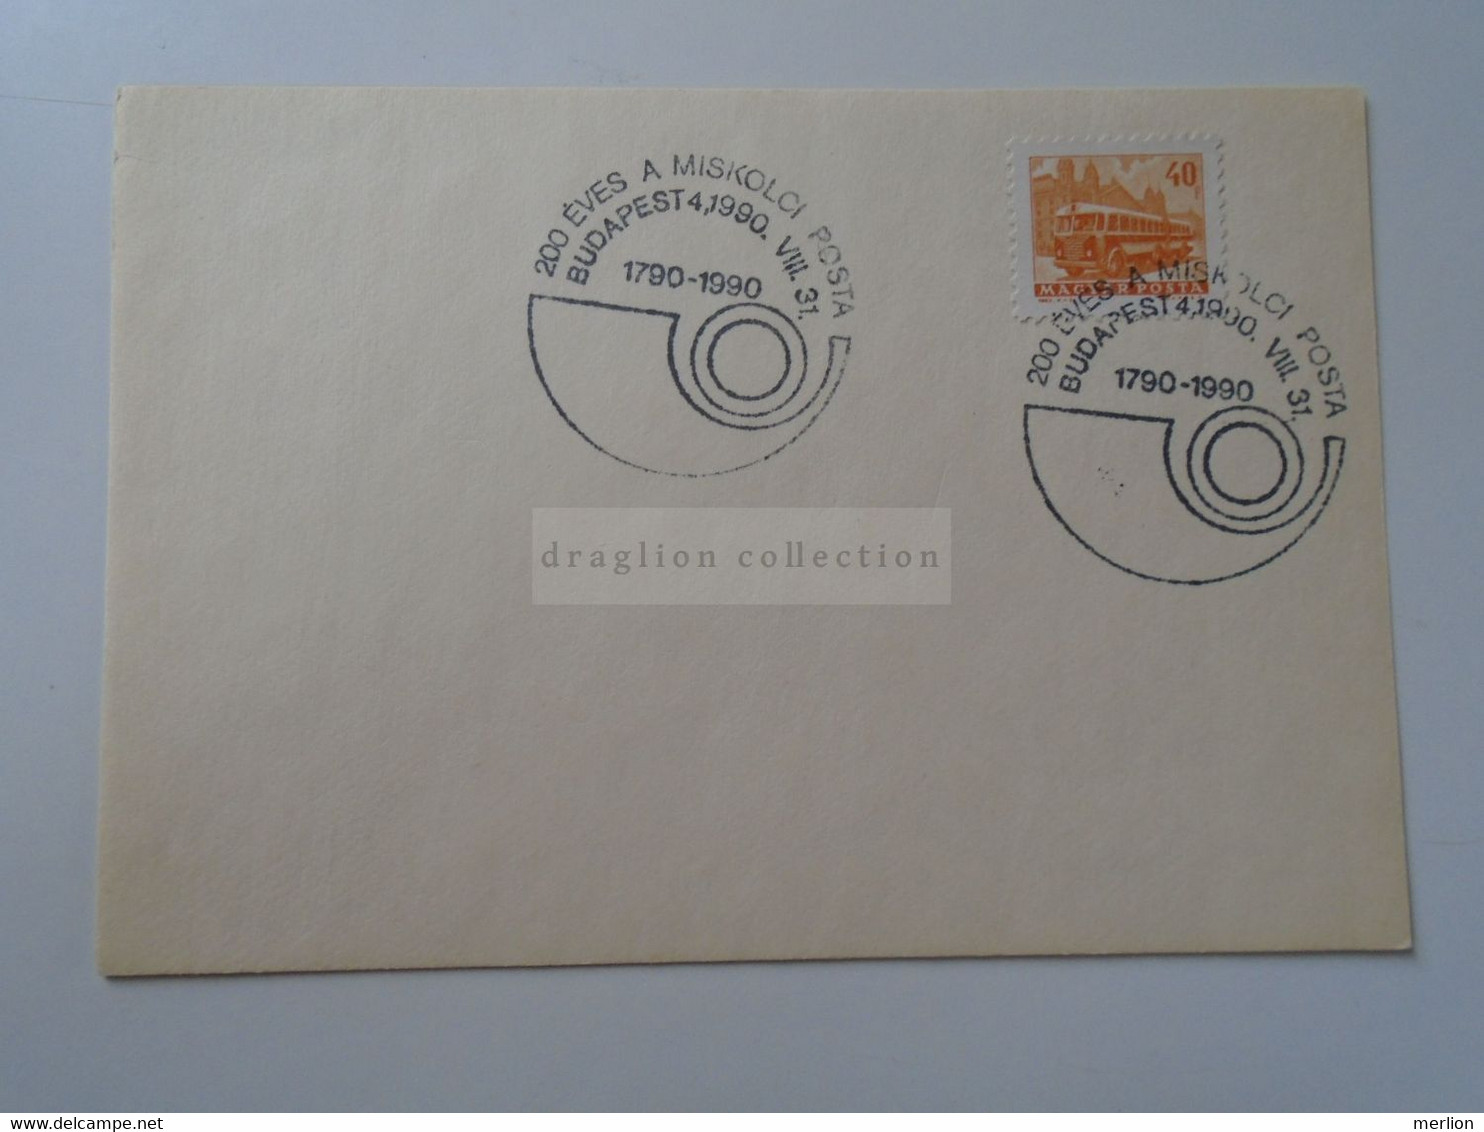 D187084   HUNGARY  Postmark     MAGYAR POSTA   - Hungarian Post - 200 éves  A Miskolci Posta  1790-1990 - Postmark Collection